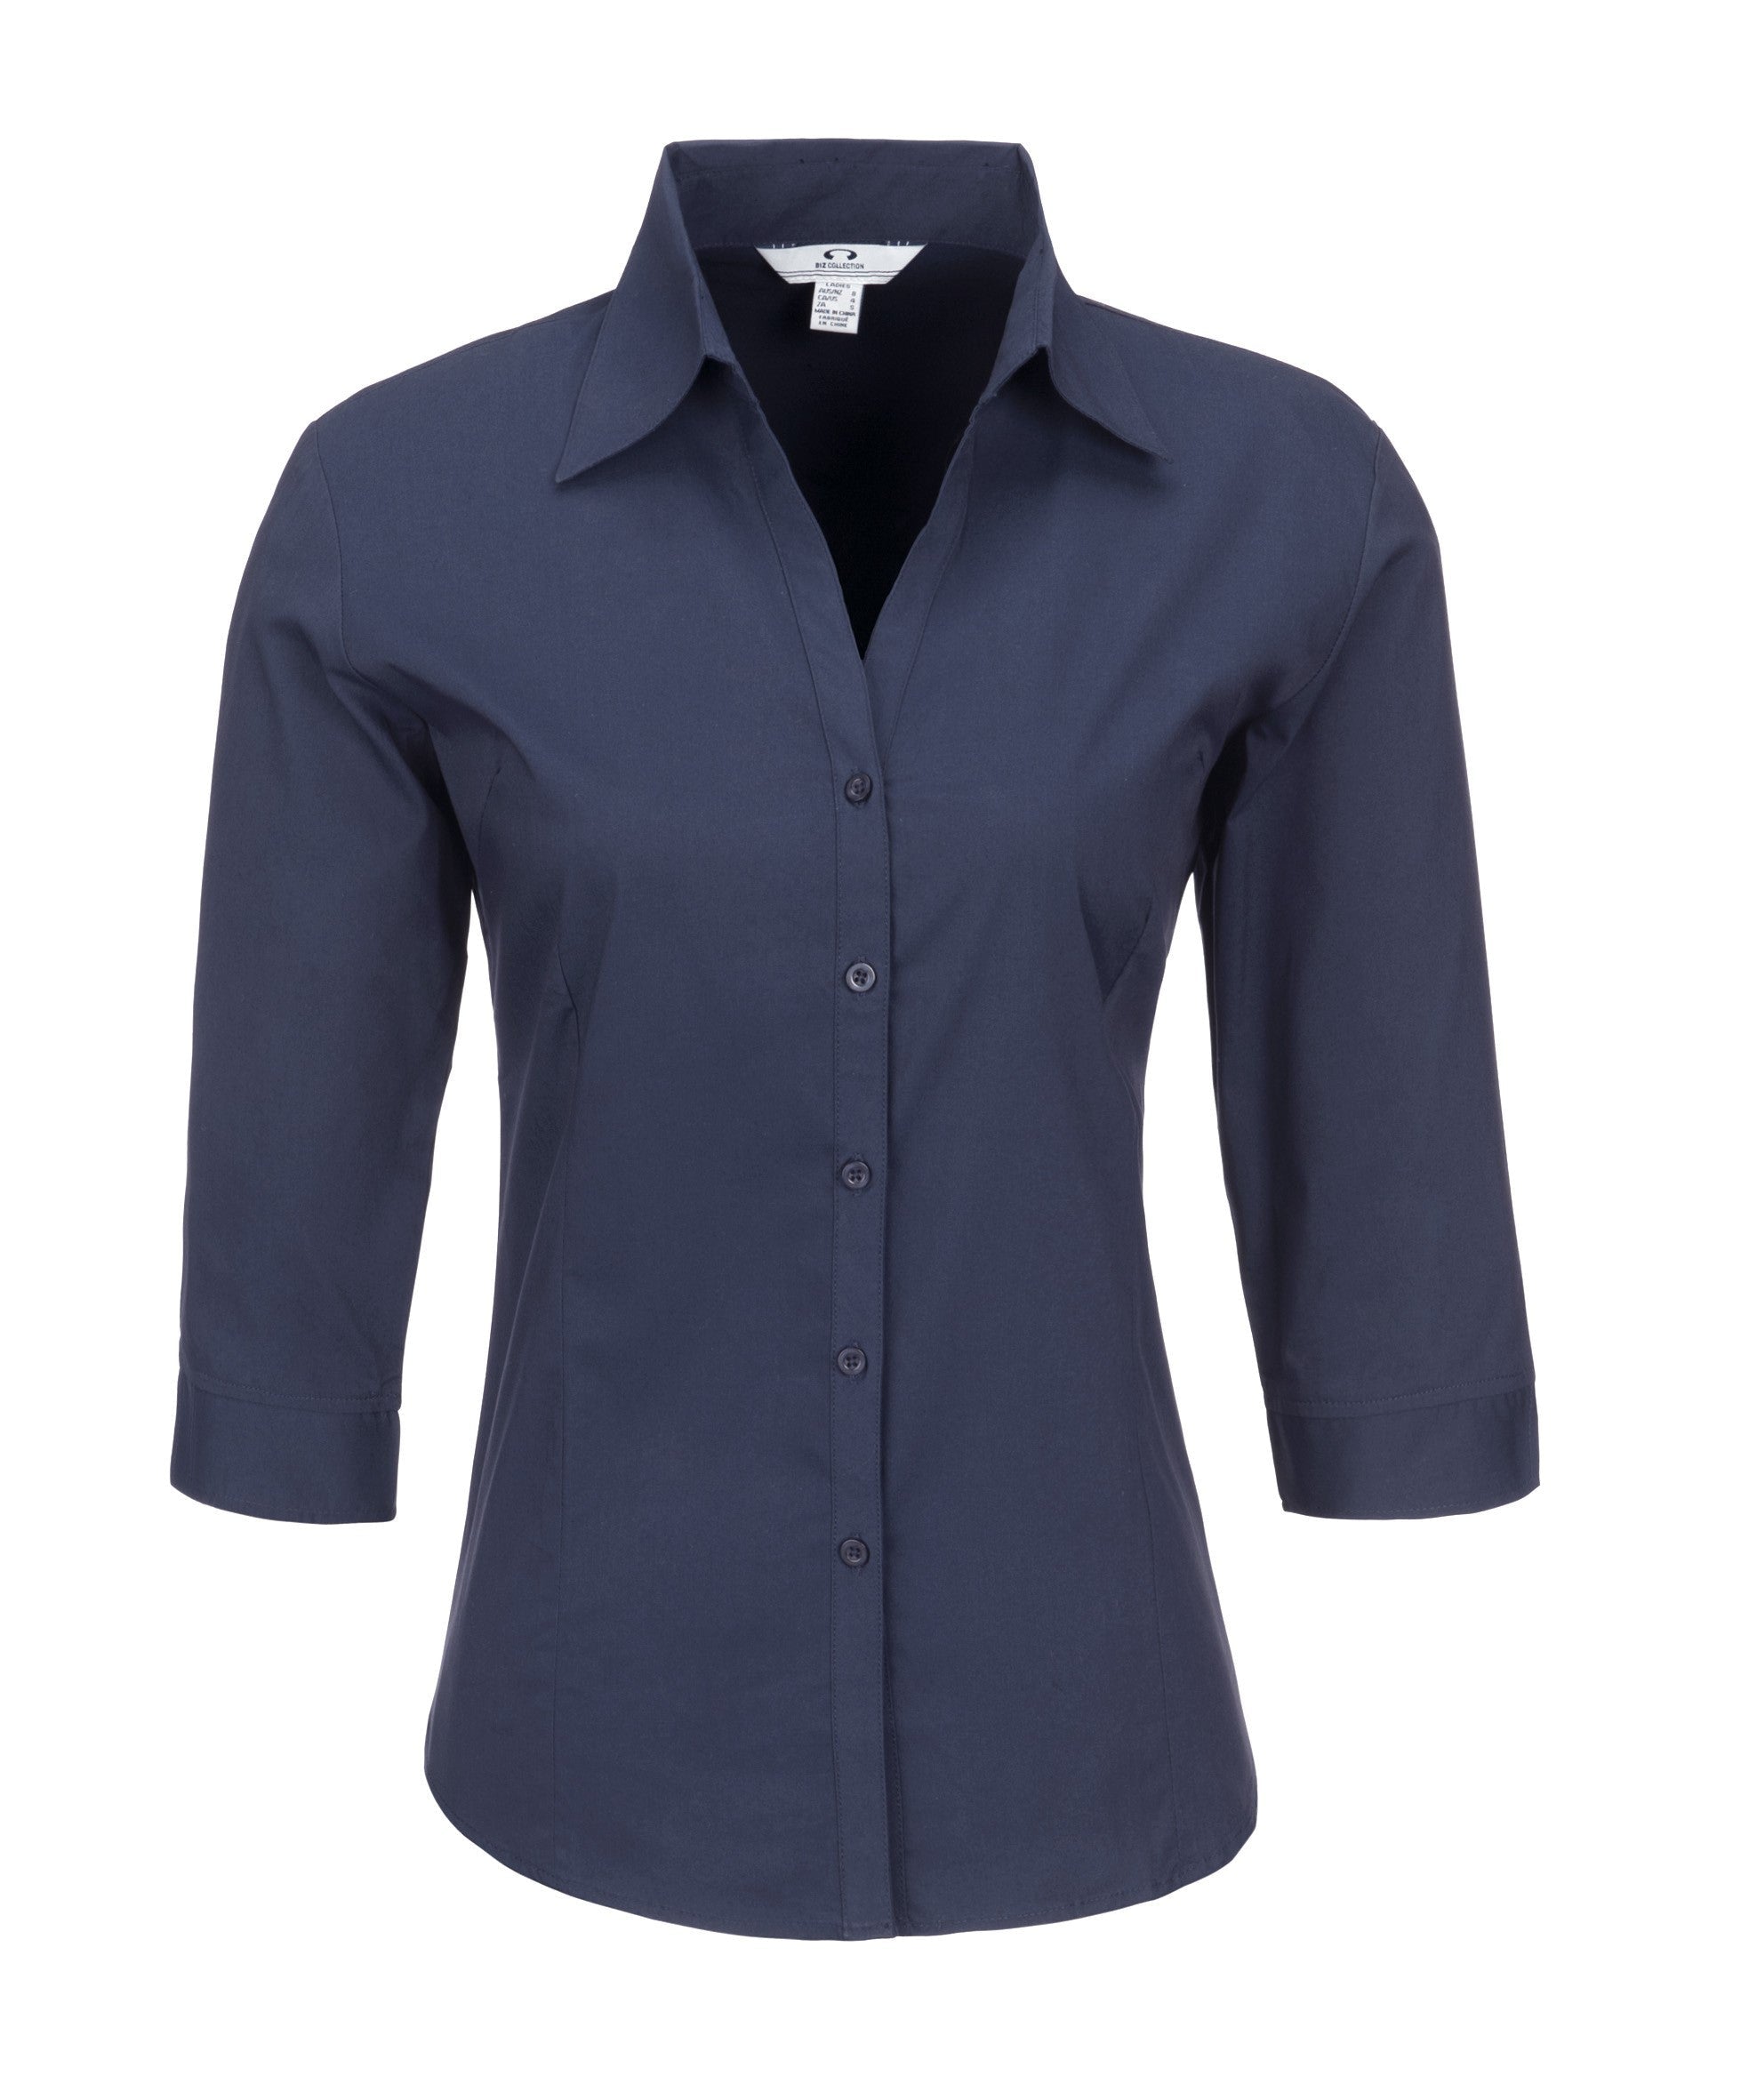 Ladies 3/4 Sleeve Metro Shirt - Black Only-2XL-Navy-N